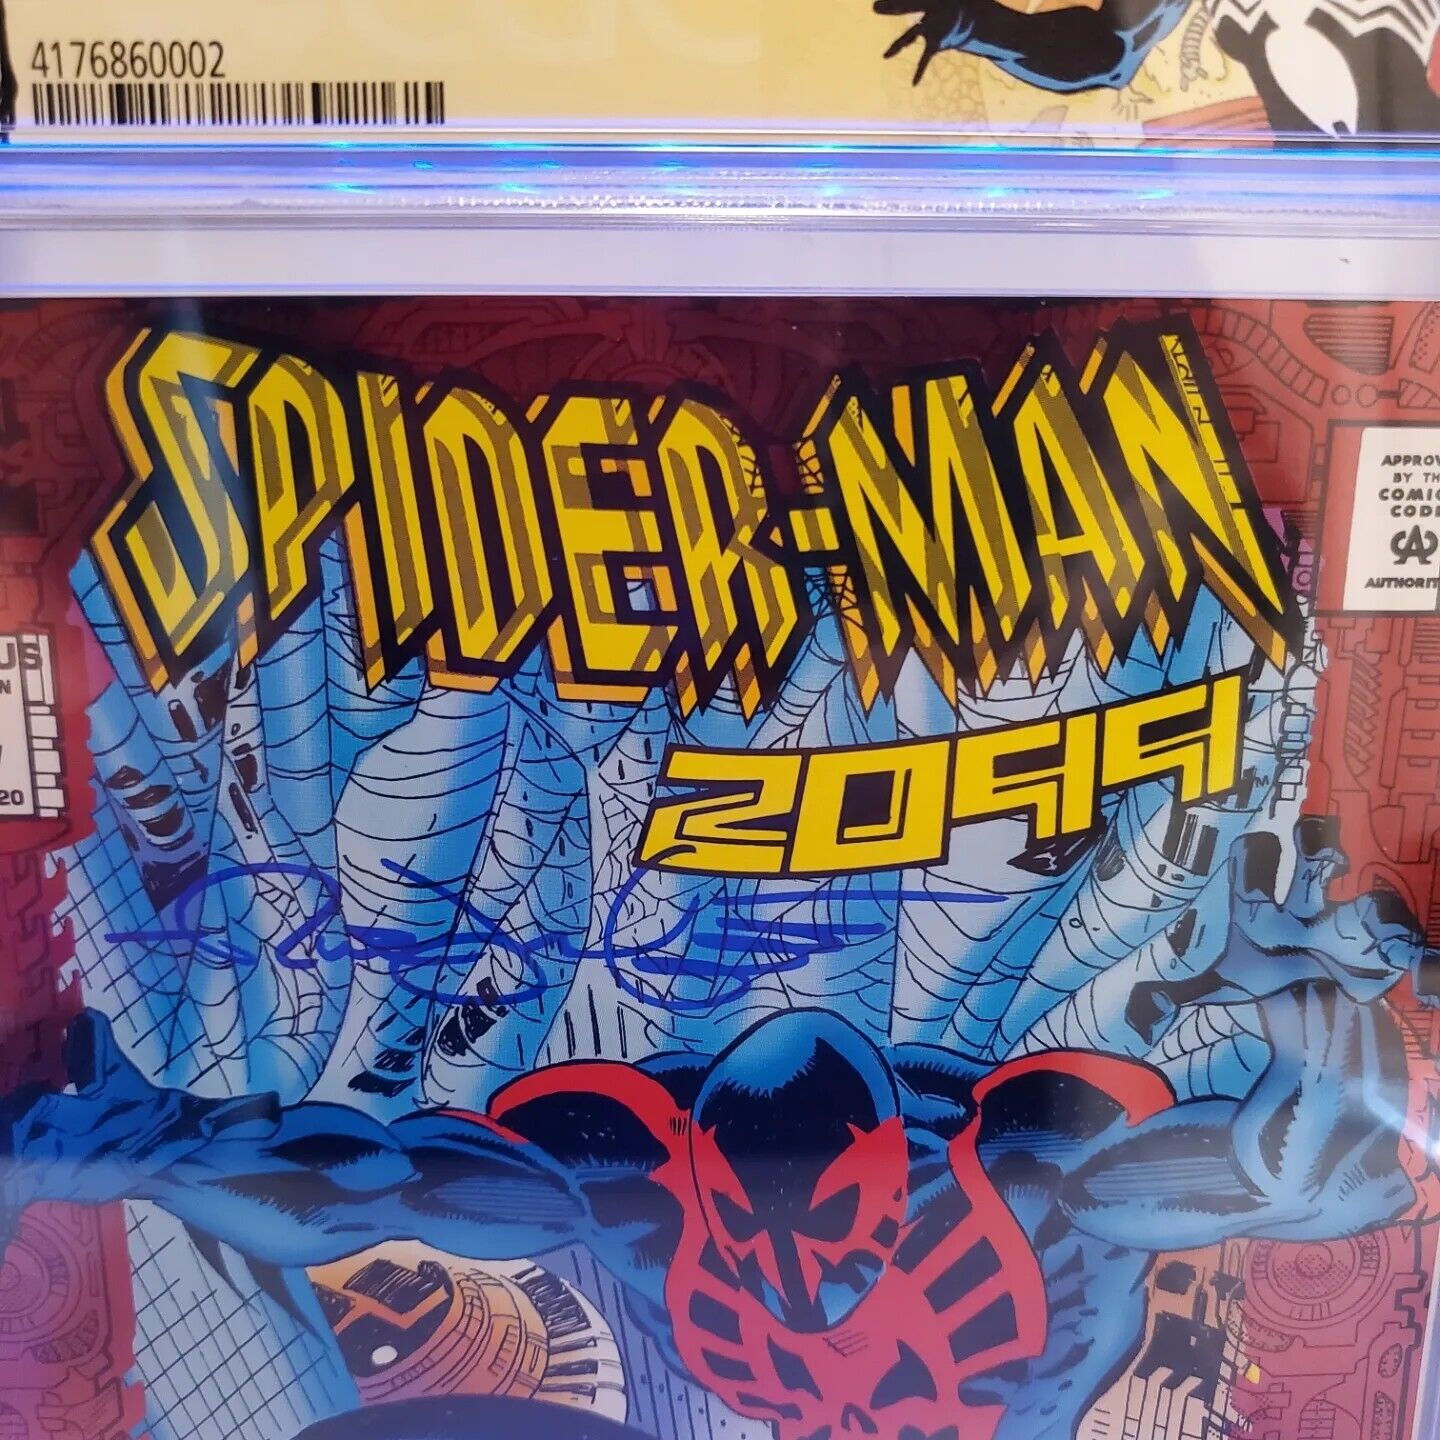 Spider-man 2099 #1 RARE ERROR, 1 OF A KIND 3D ERROR